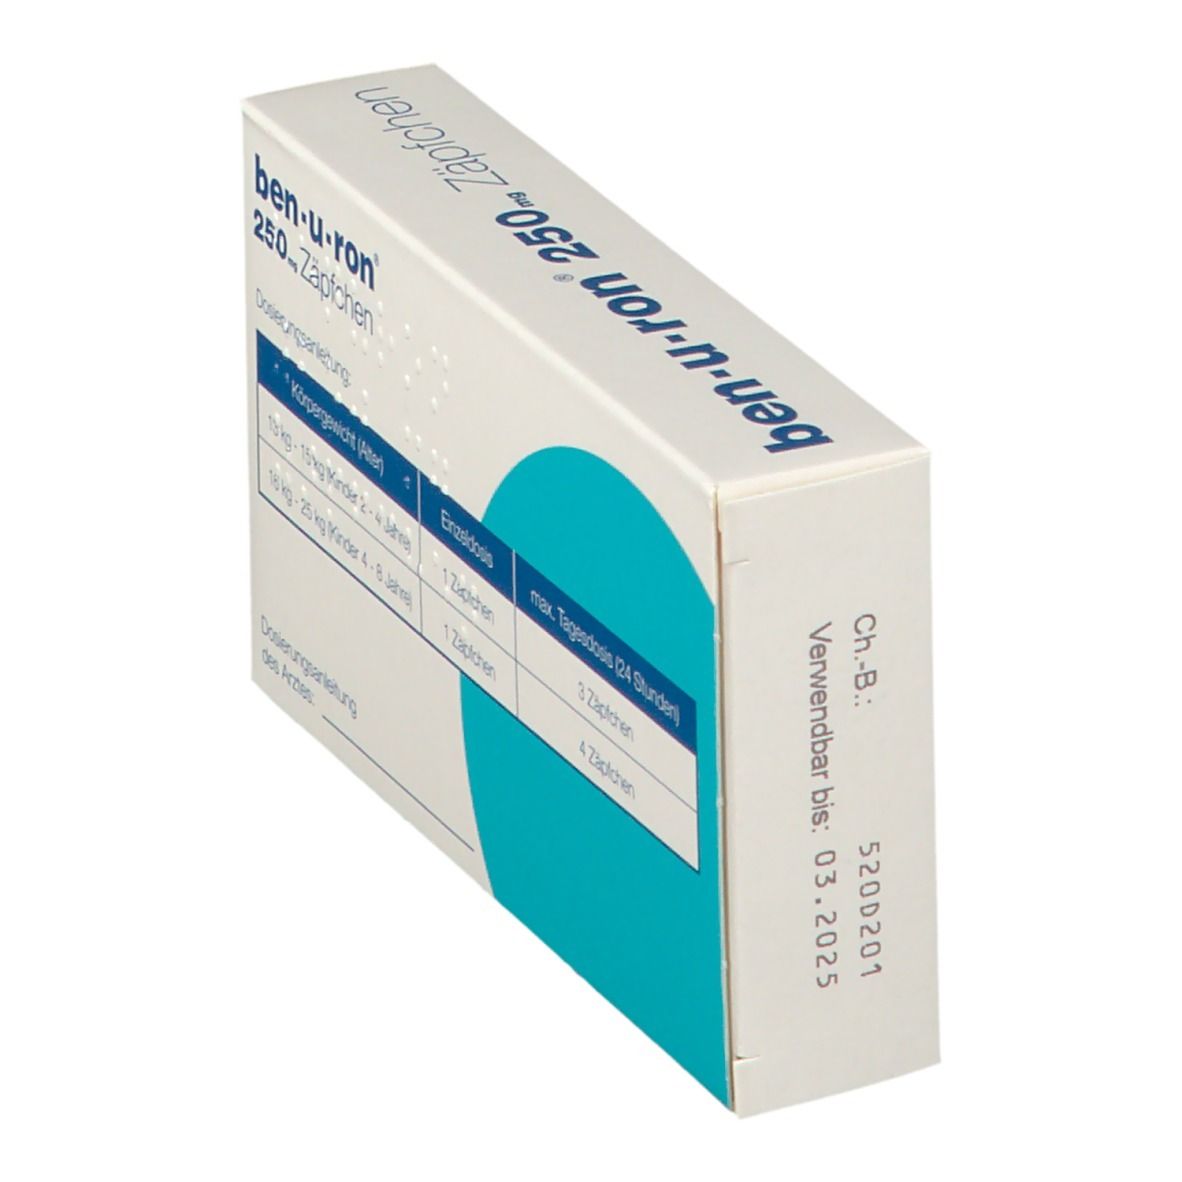 ben-u-ron® 250 mg